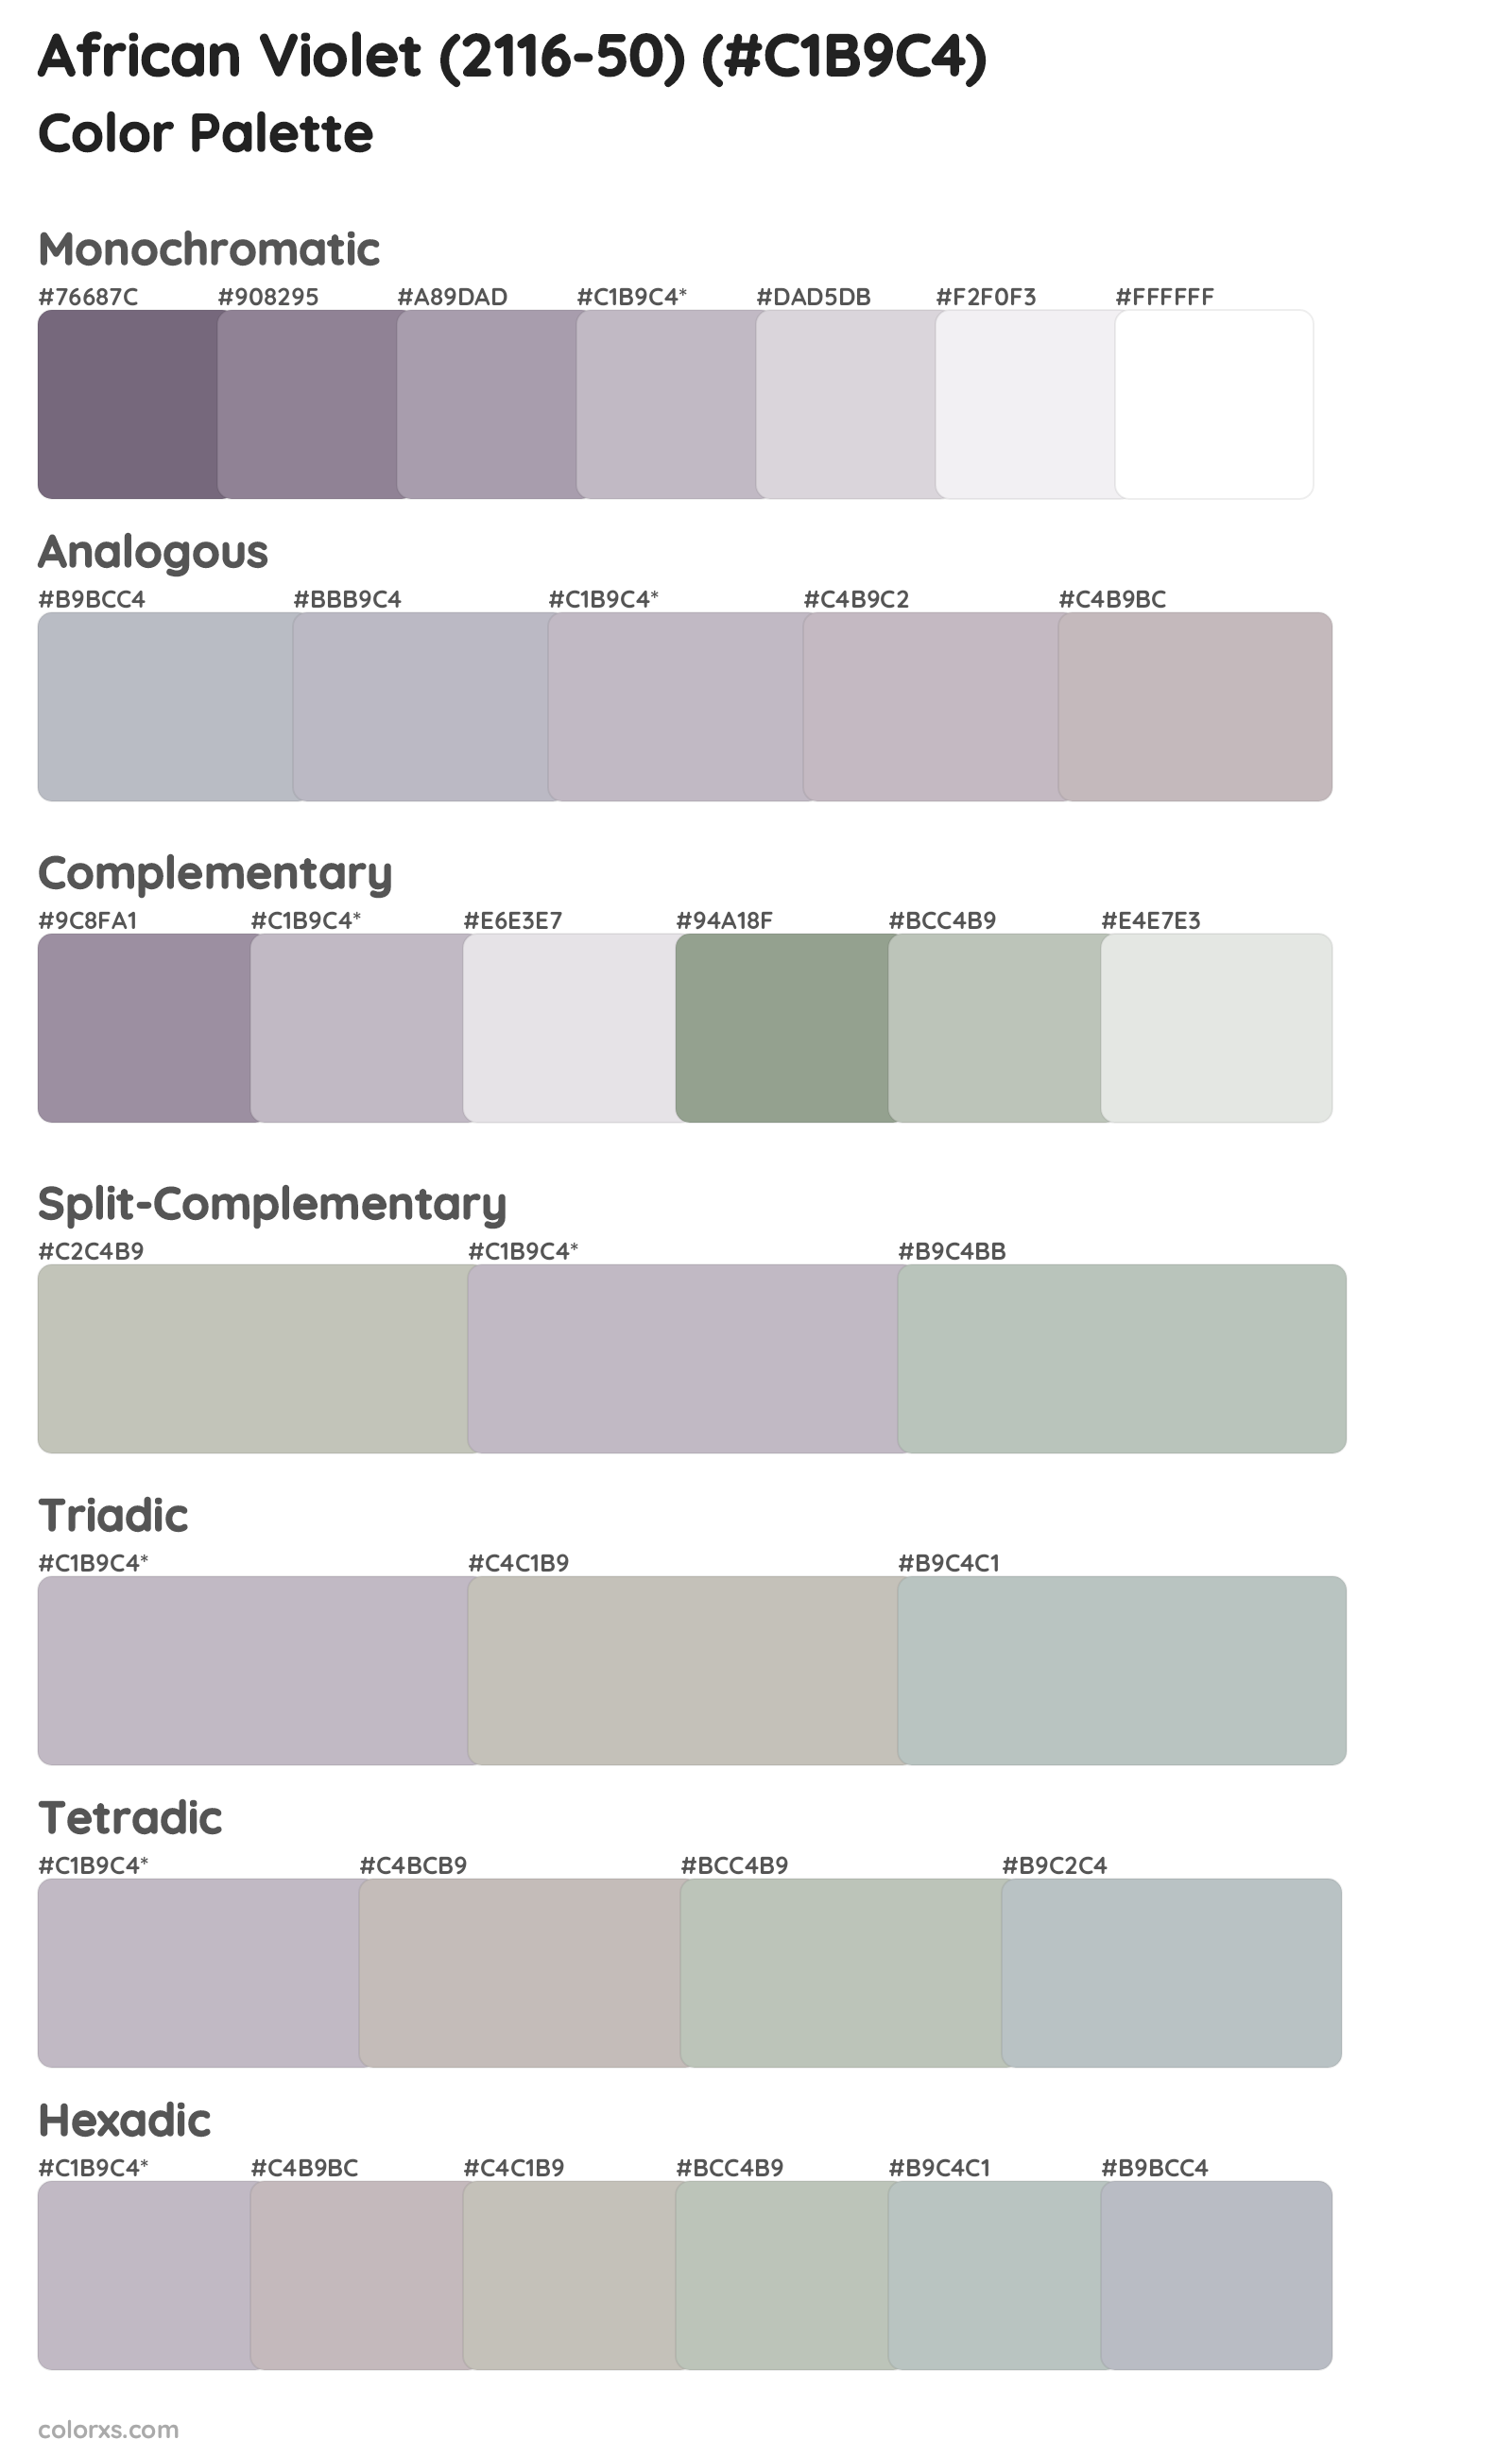 African Violet (2116-50) Color Scheme Palettes